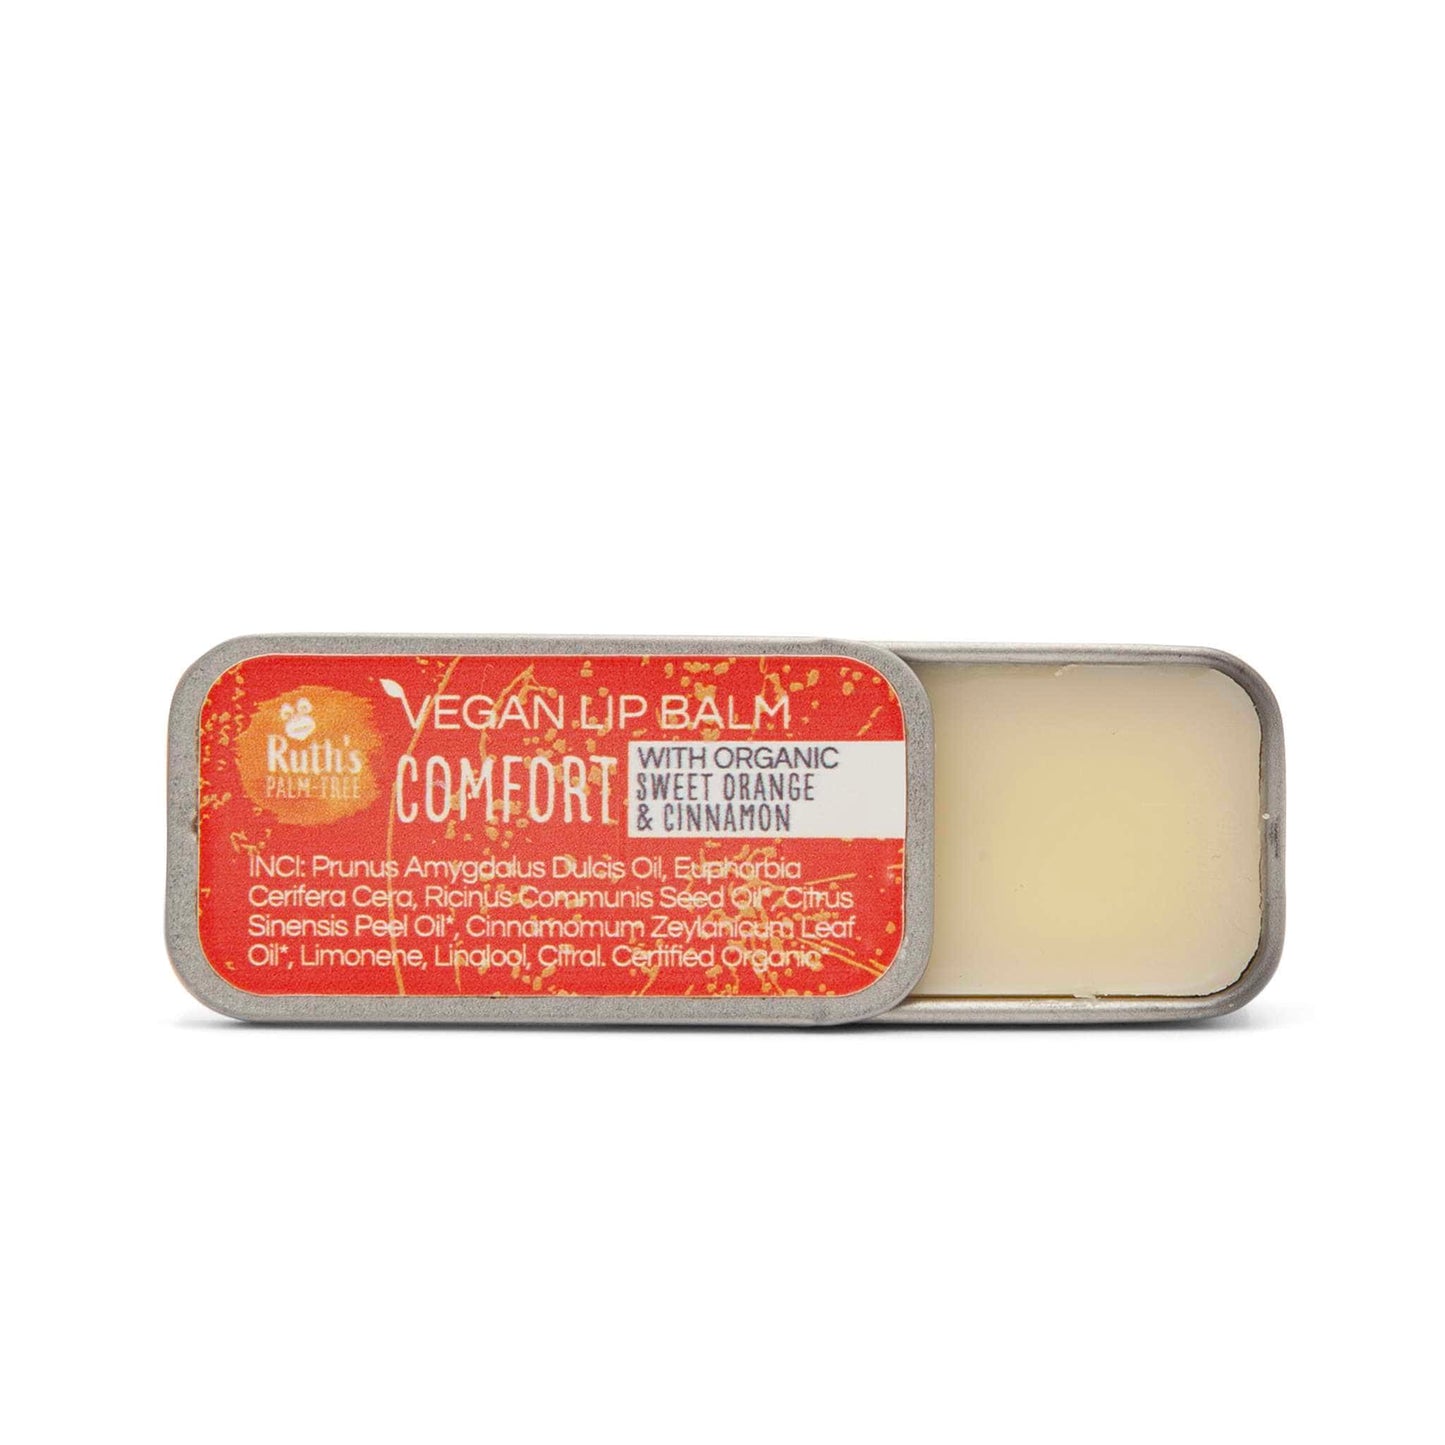 Ruth's Palm Free Skincare Comfort - Vegan - Org Sweet Orange & Cinnamon Ruth's Palm Free Vegan Lip Balm - 7g